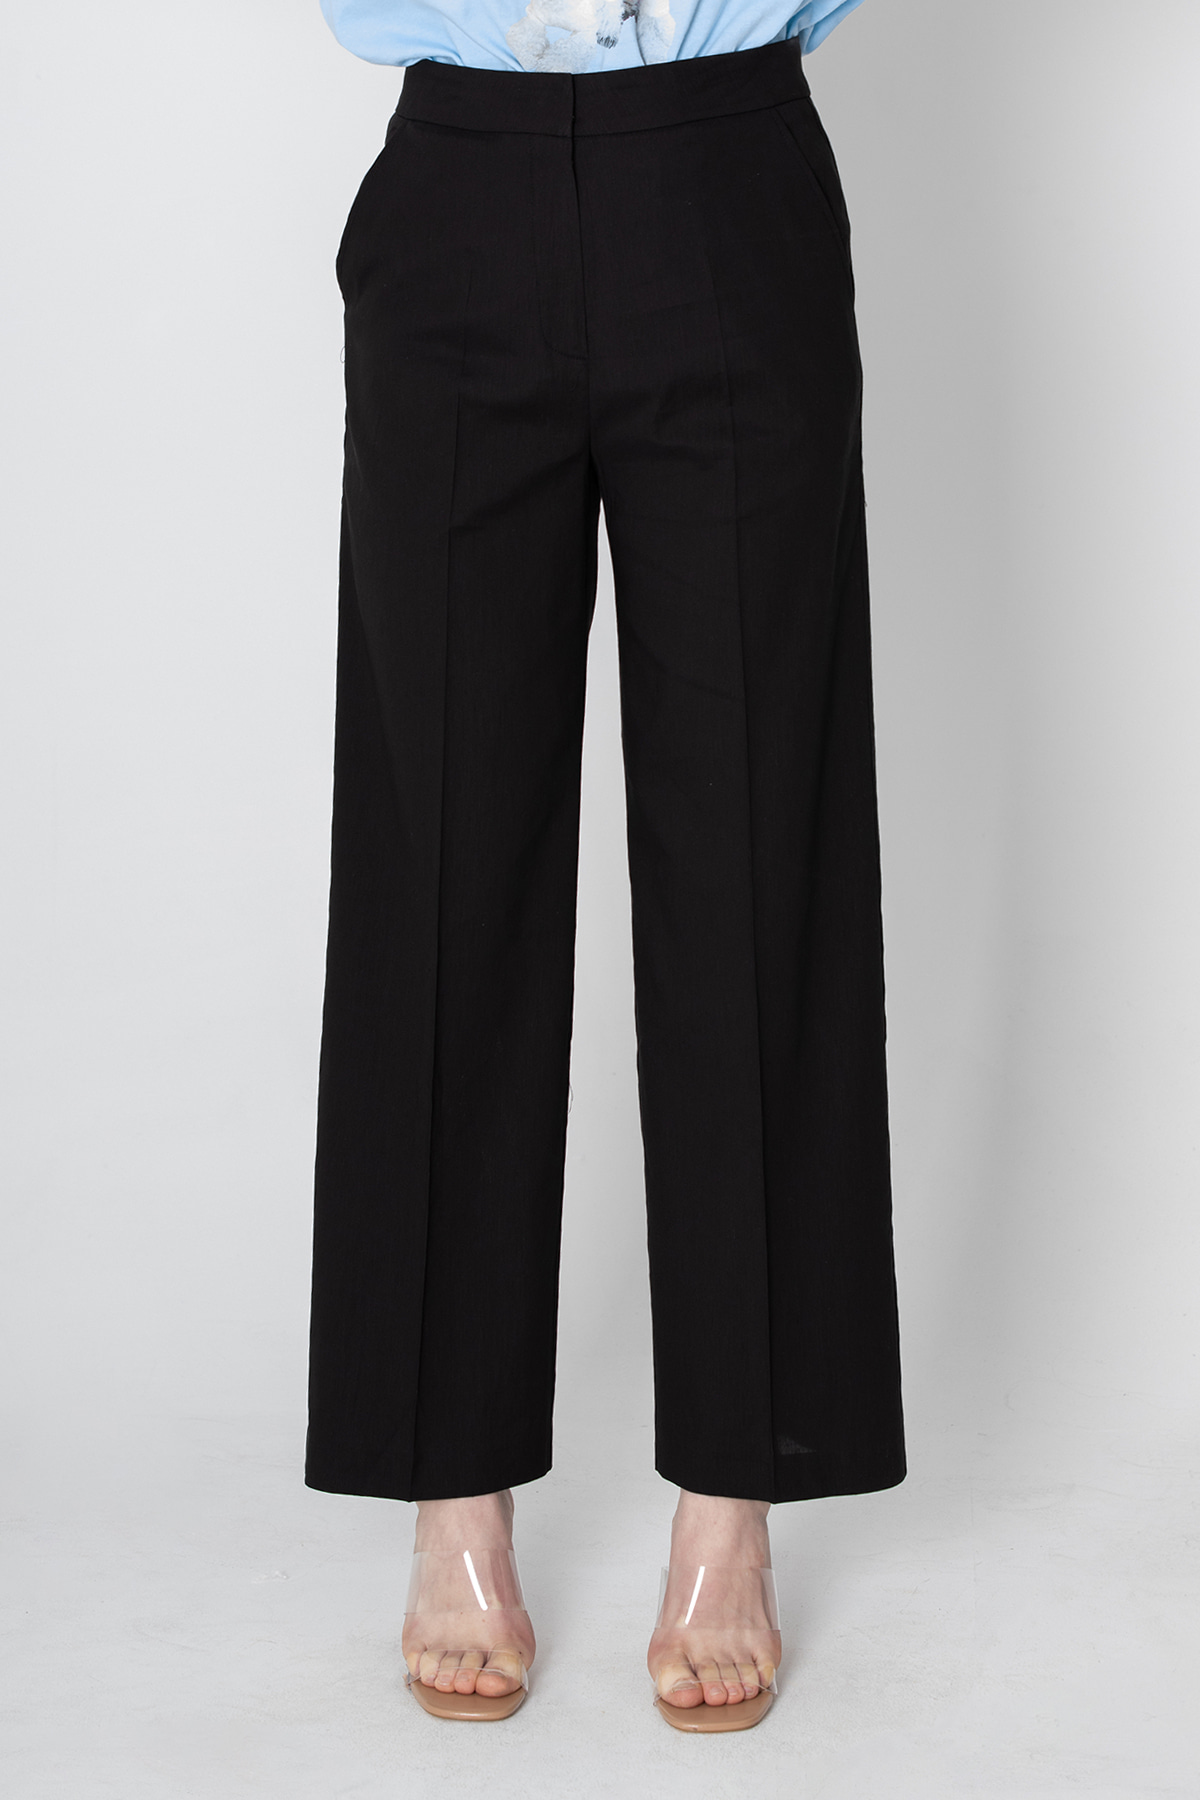 POOCION Basic Trouser (Black)